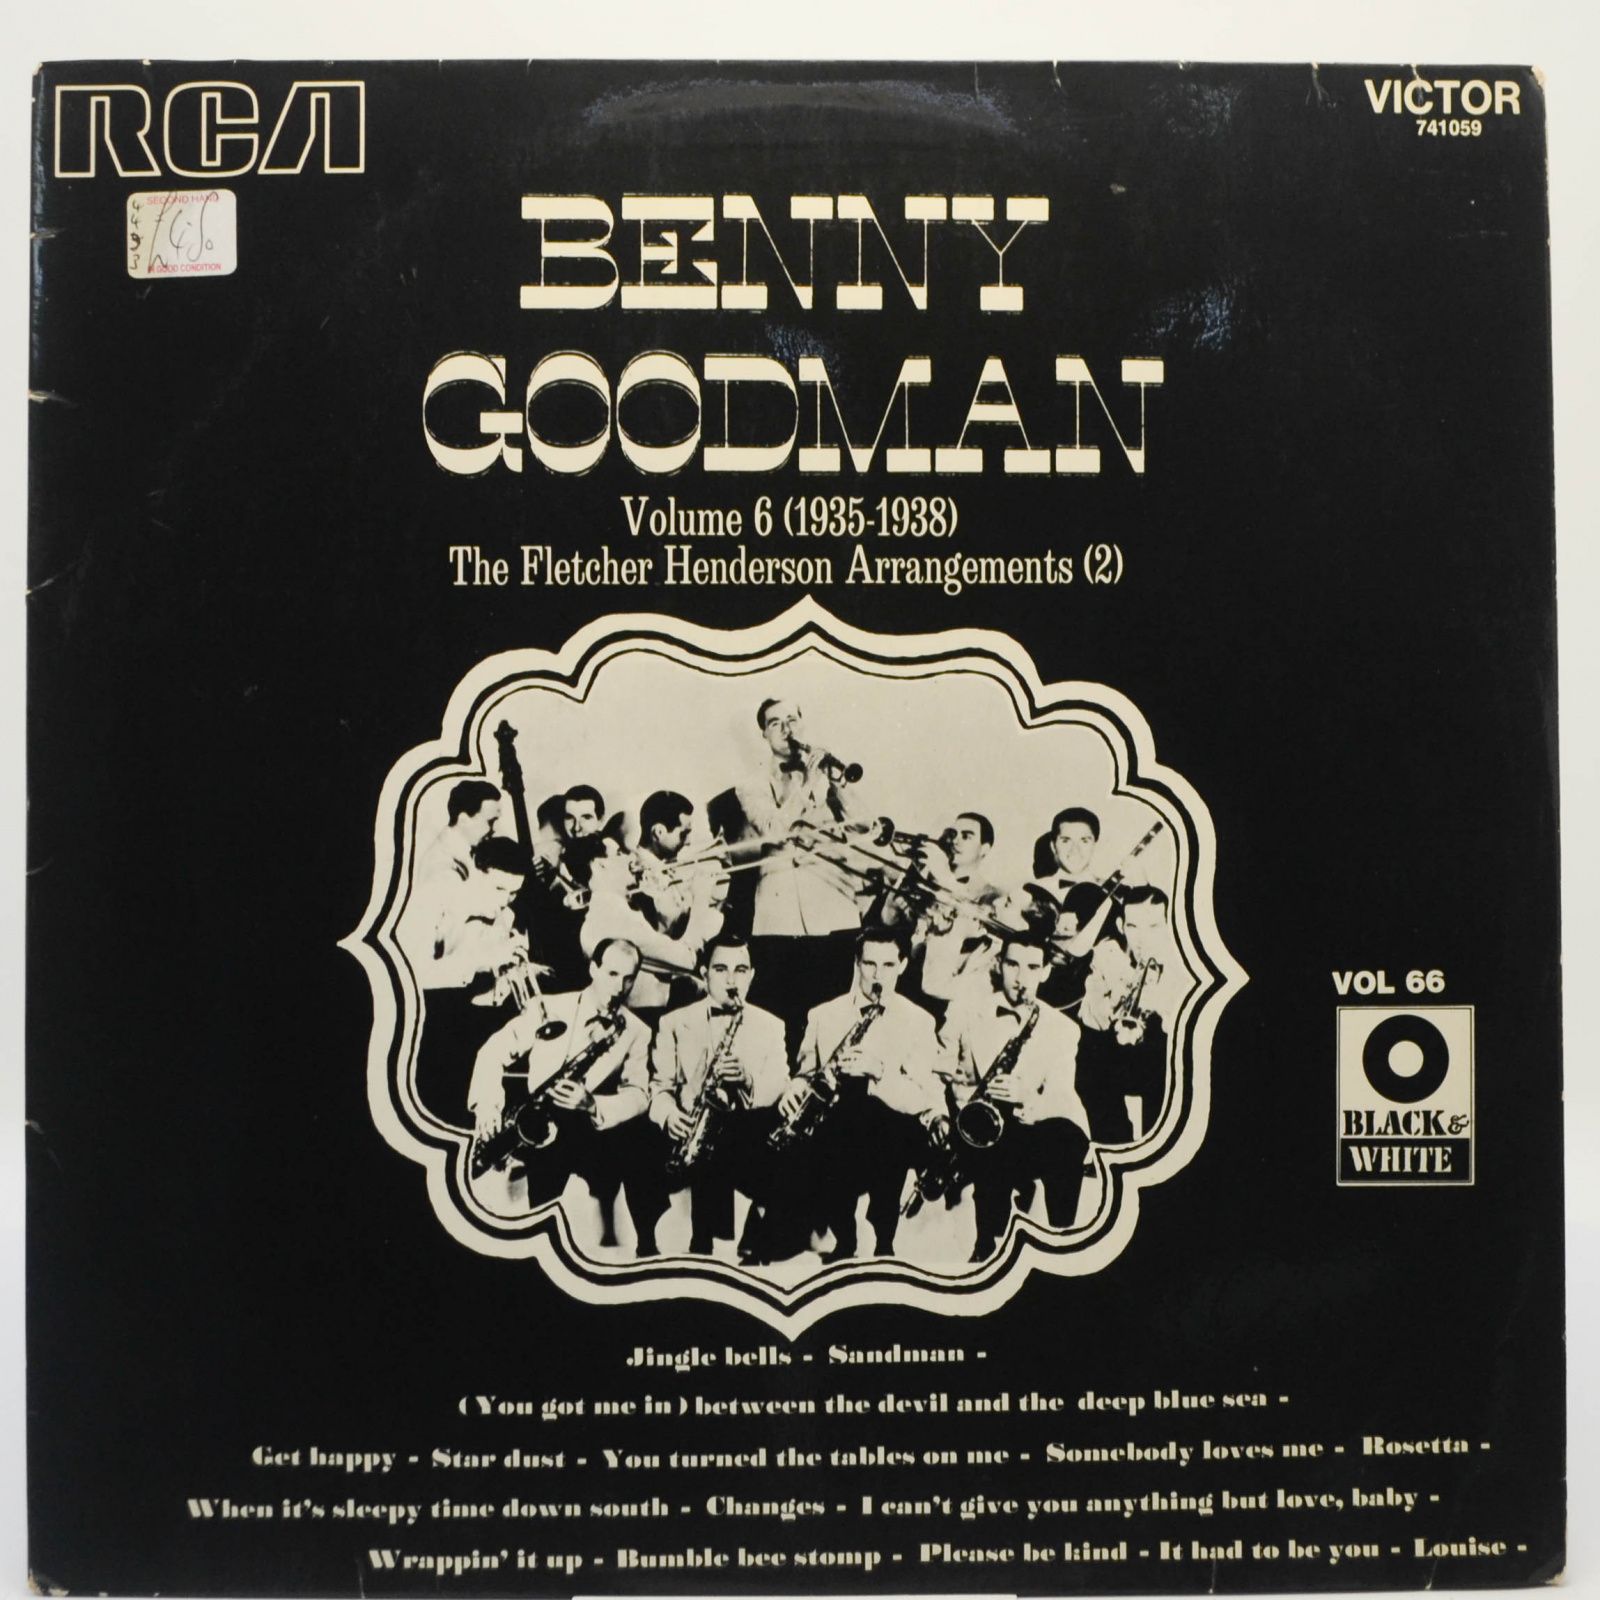 Benny Goodman — Volume 6 (1935-1938) The Fletcher Henderson Arrangements (2), 1972